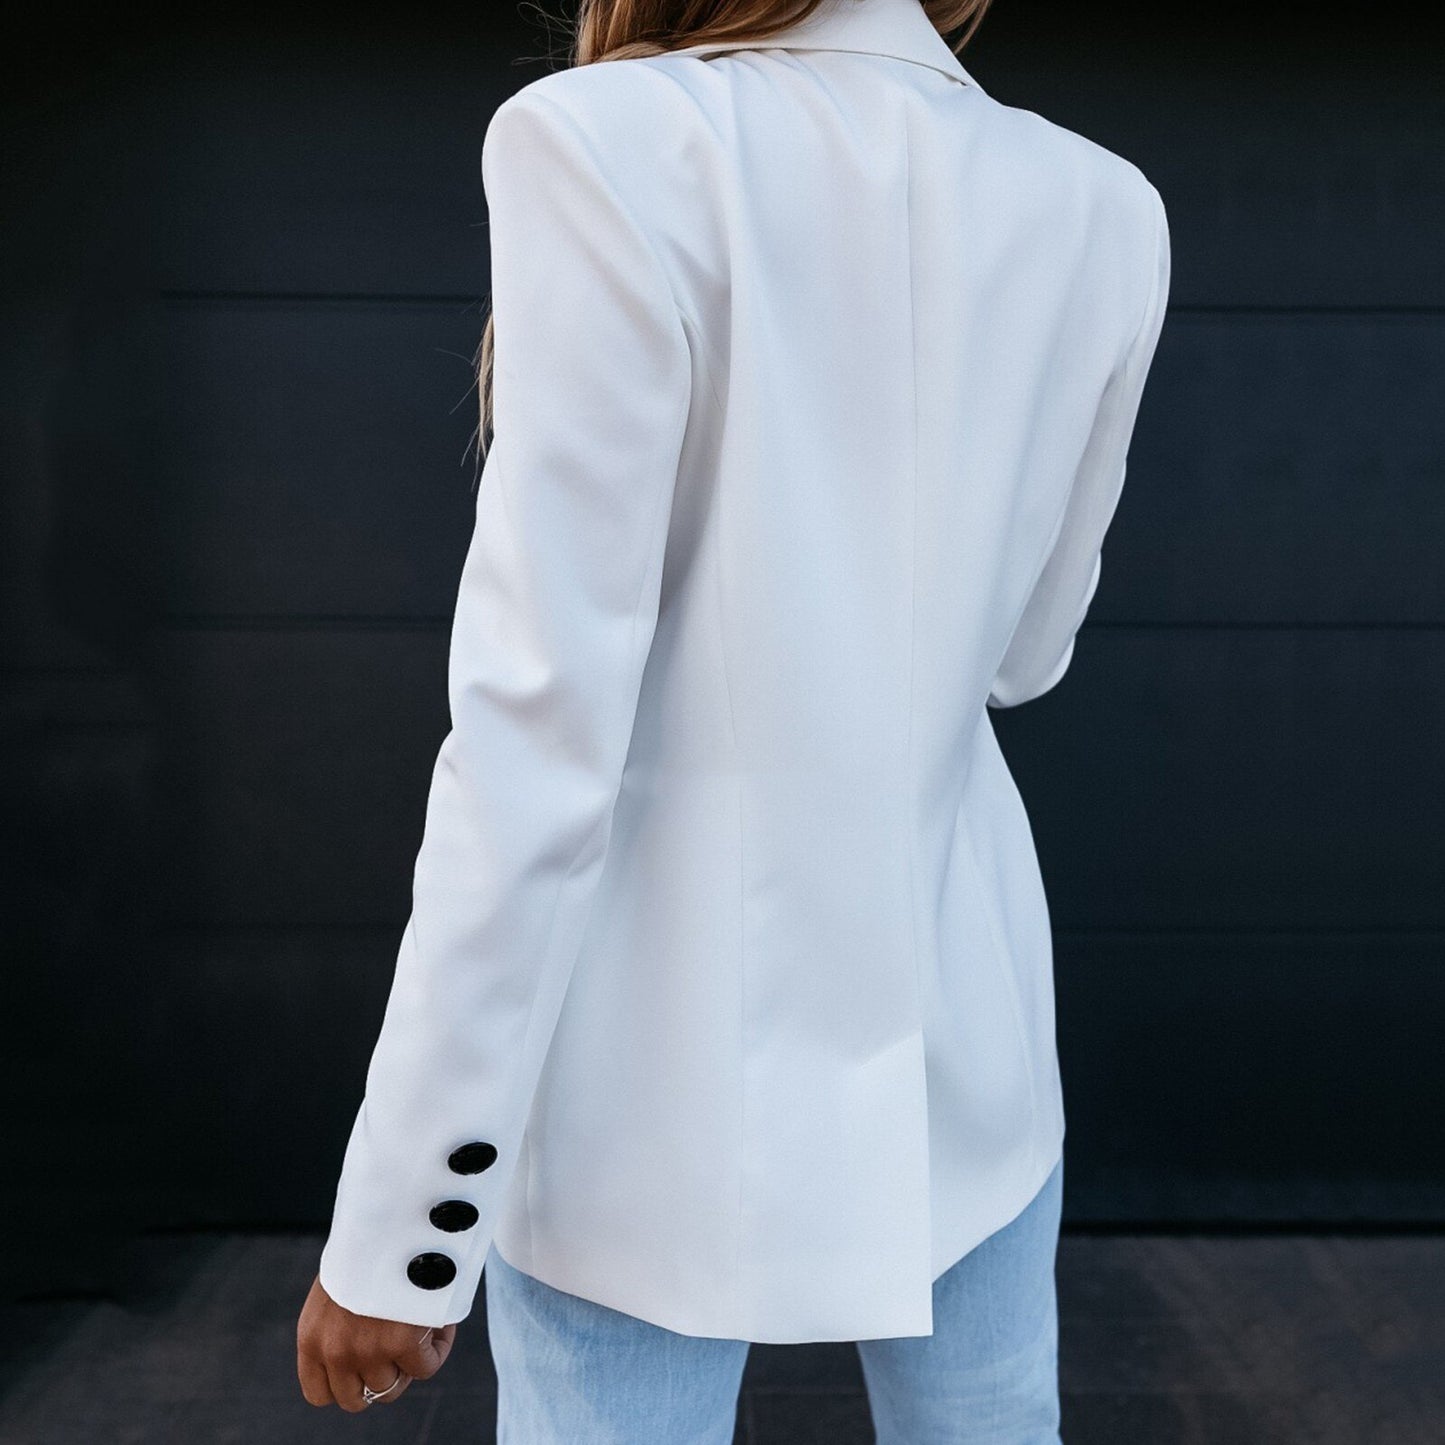 2021 Autumn Casual Slim Blazer Jackets Elegant Women Office Work Blazers Long Sleeve Buttons Solid Thin Coats Outwear Tops #M